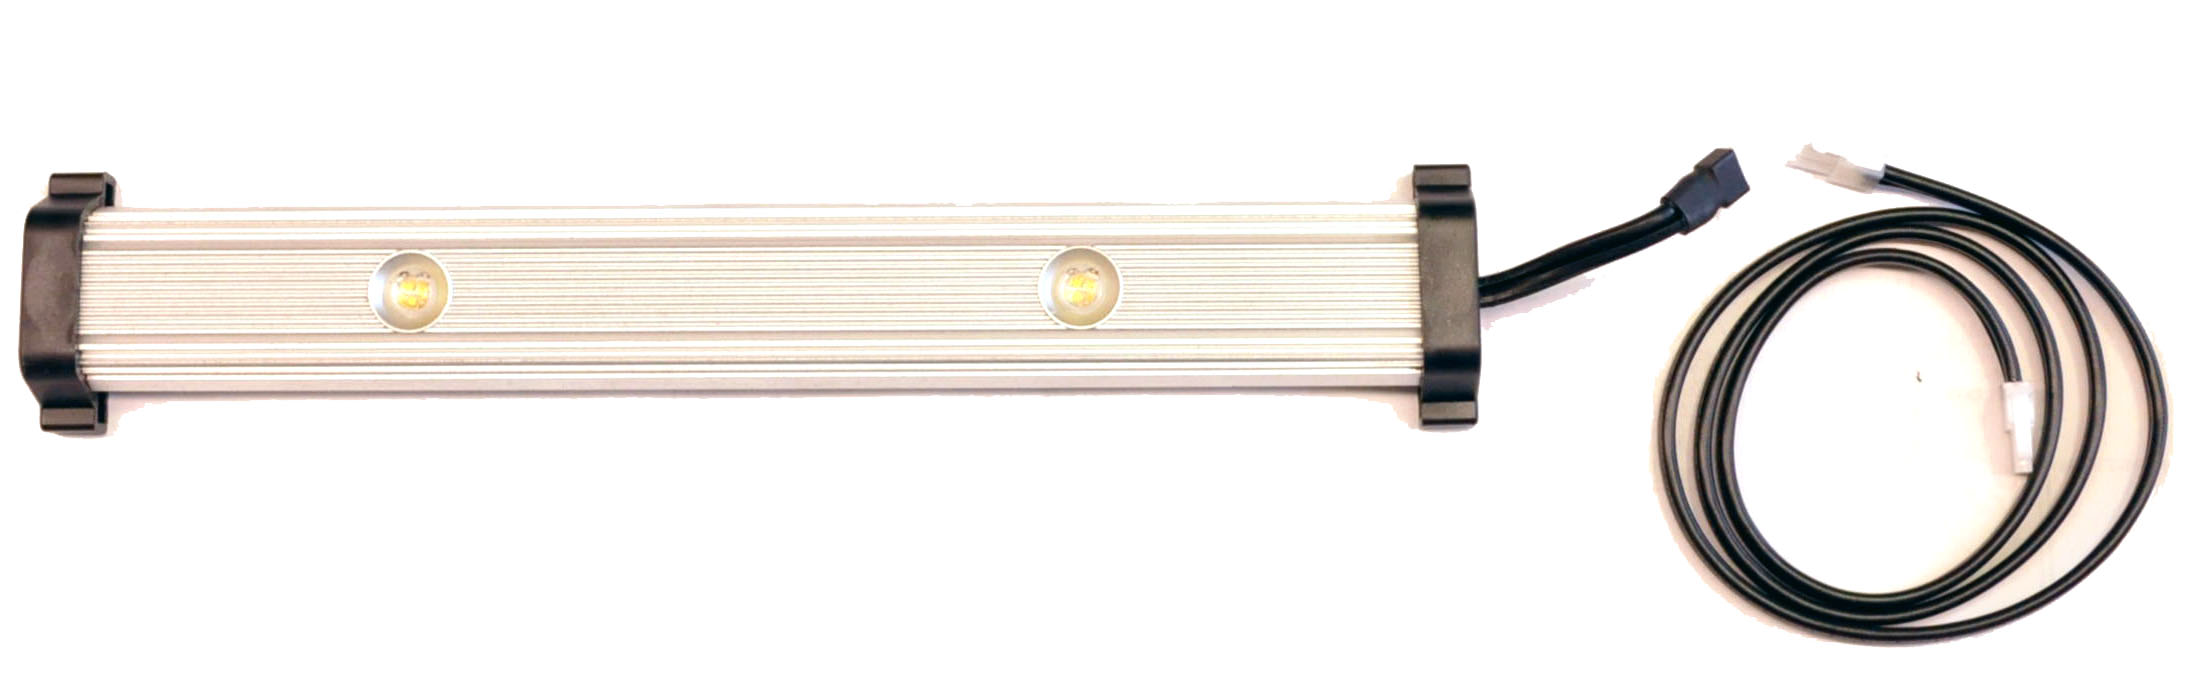 12W LED Underhood Light Strip (2 LEDs) - Click Image to Close